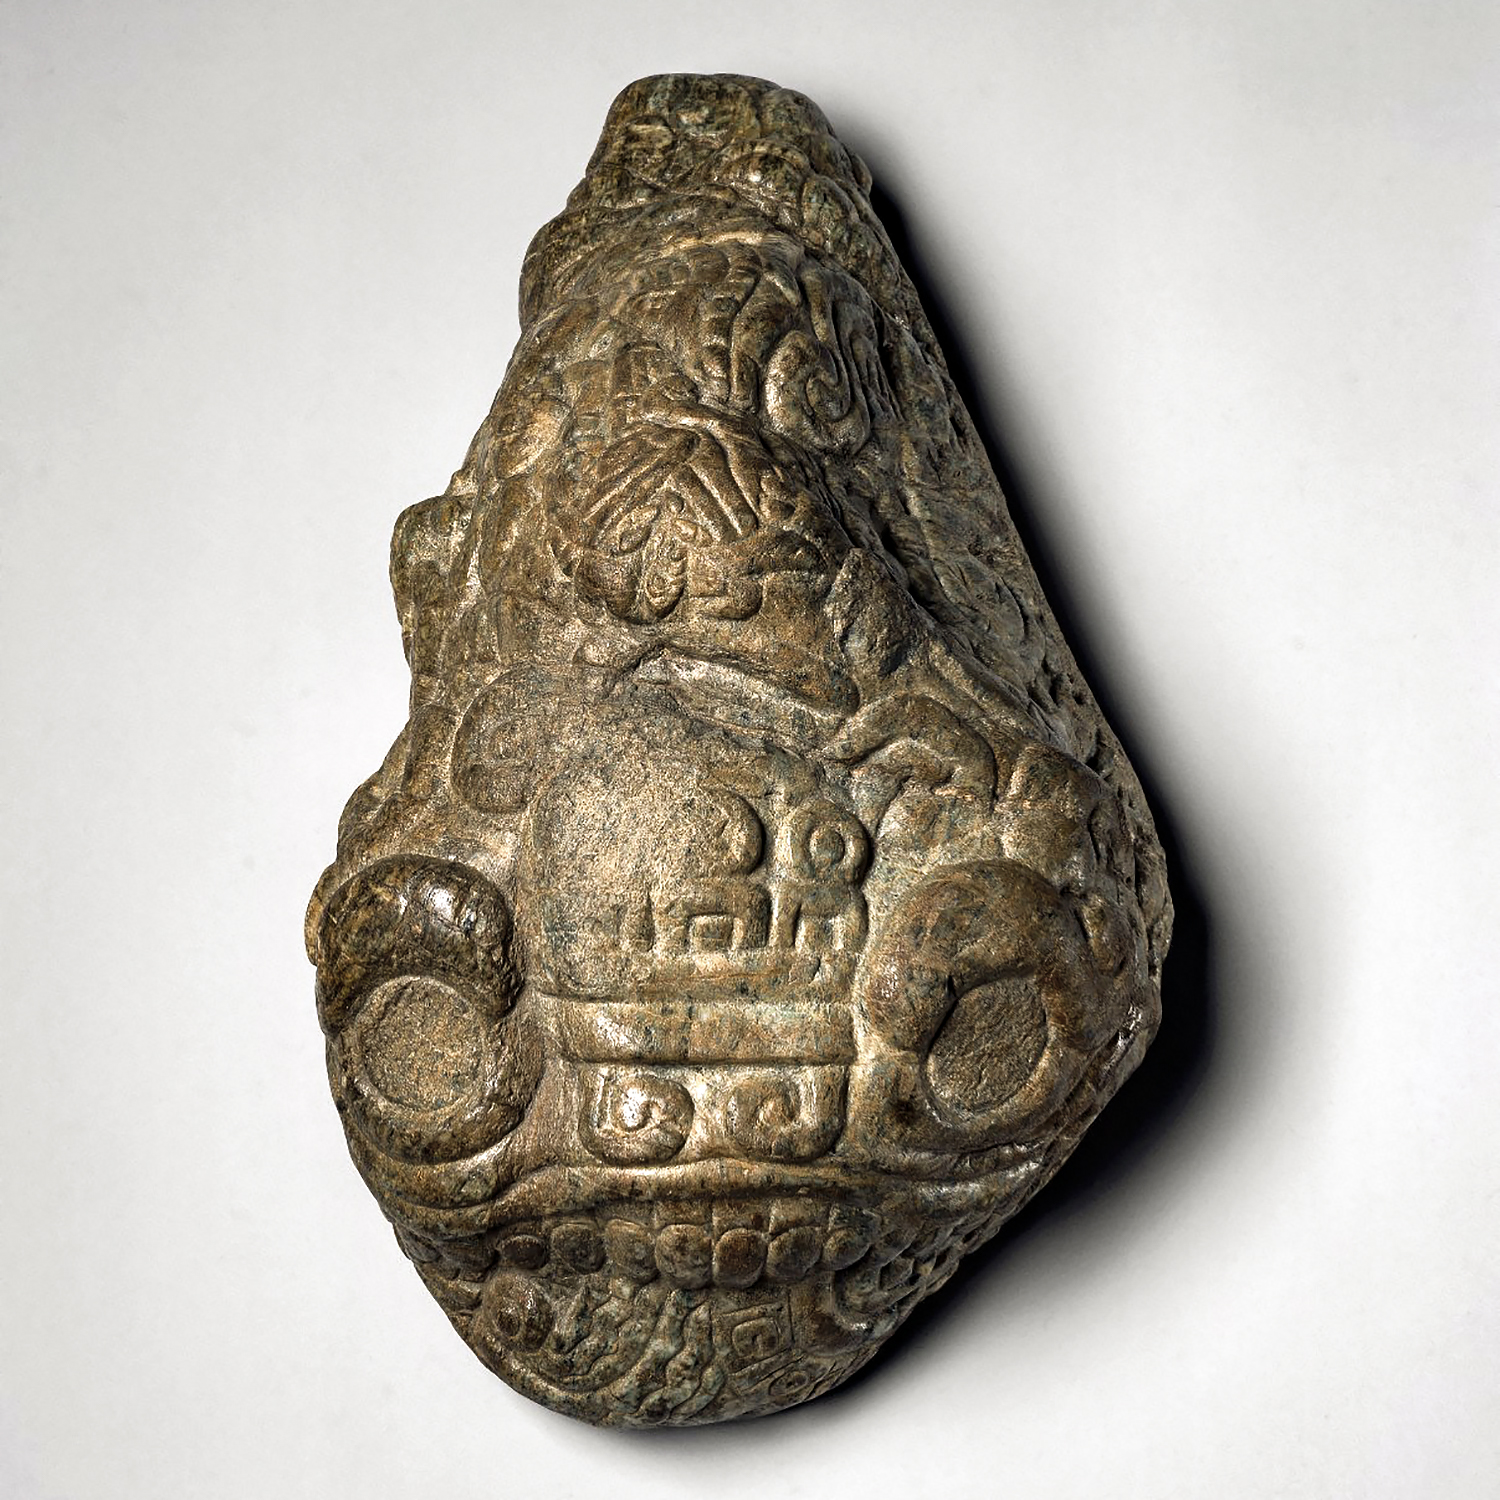 Богиня-монстр Сипактли. Ацтеки, 15в. н.э. Коллекция Brooklyn Museum, Нью-Йорк.